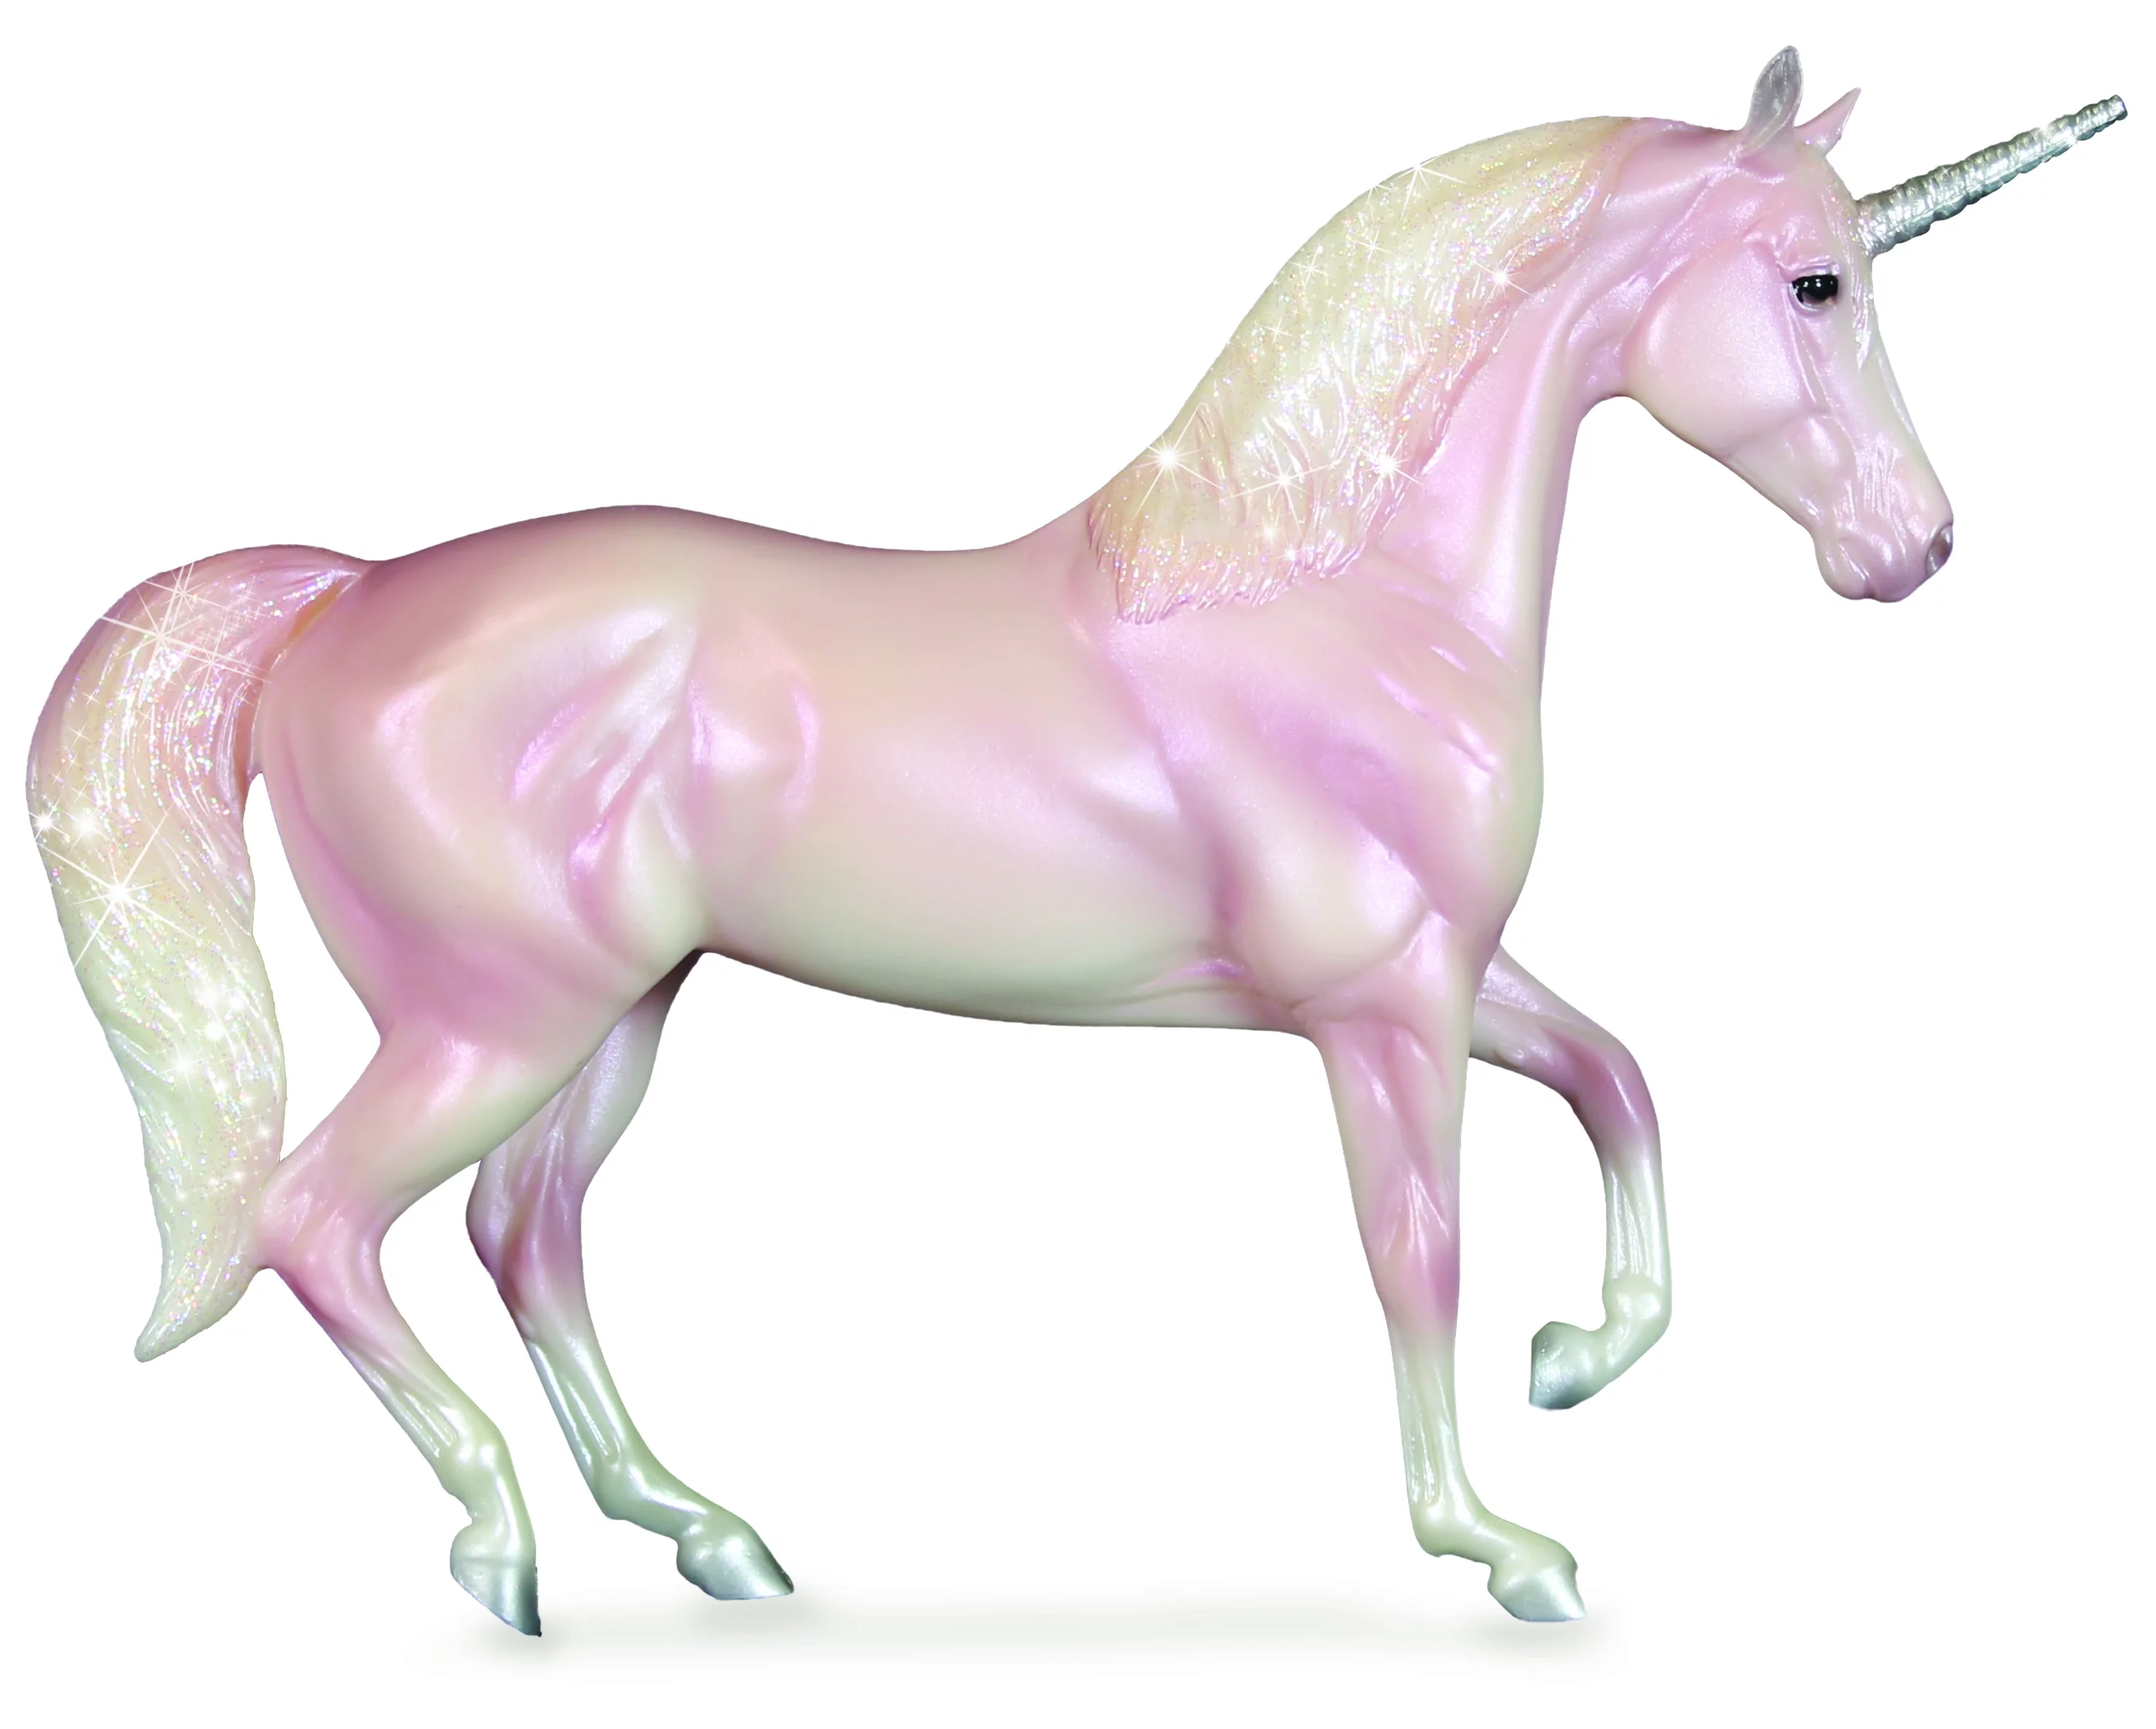 Breyer Classics Freedom Series Aurora Unicorn Fantasy Horse Model Toy Figure - 1: 12 Scale